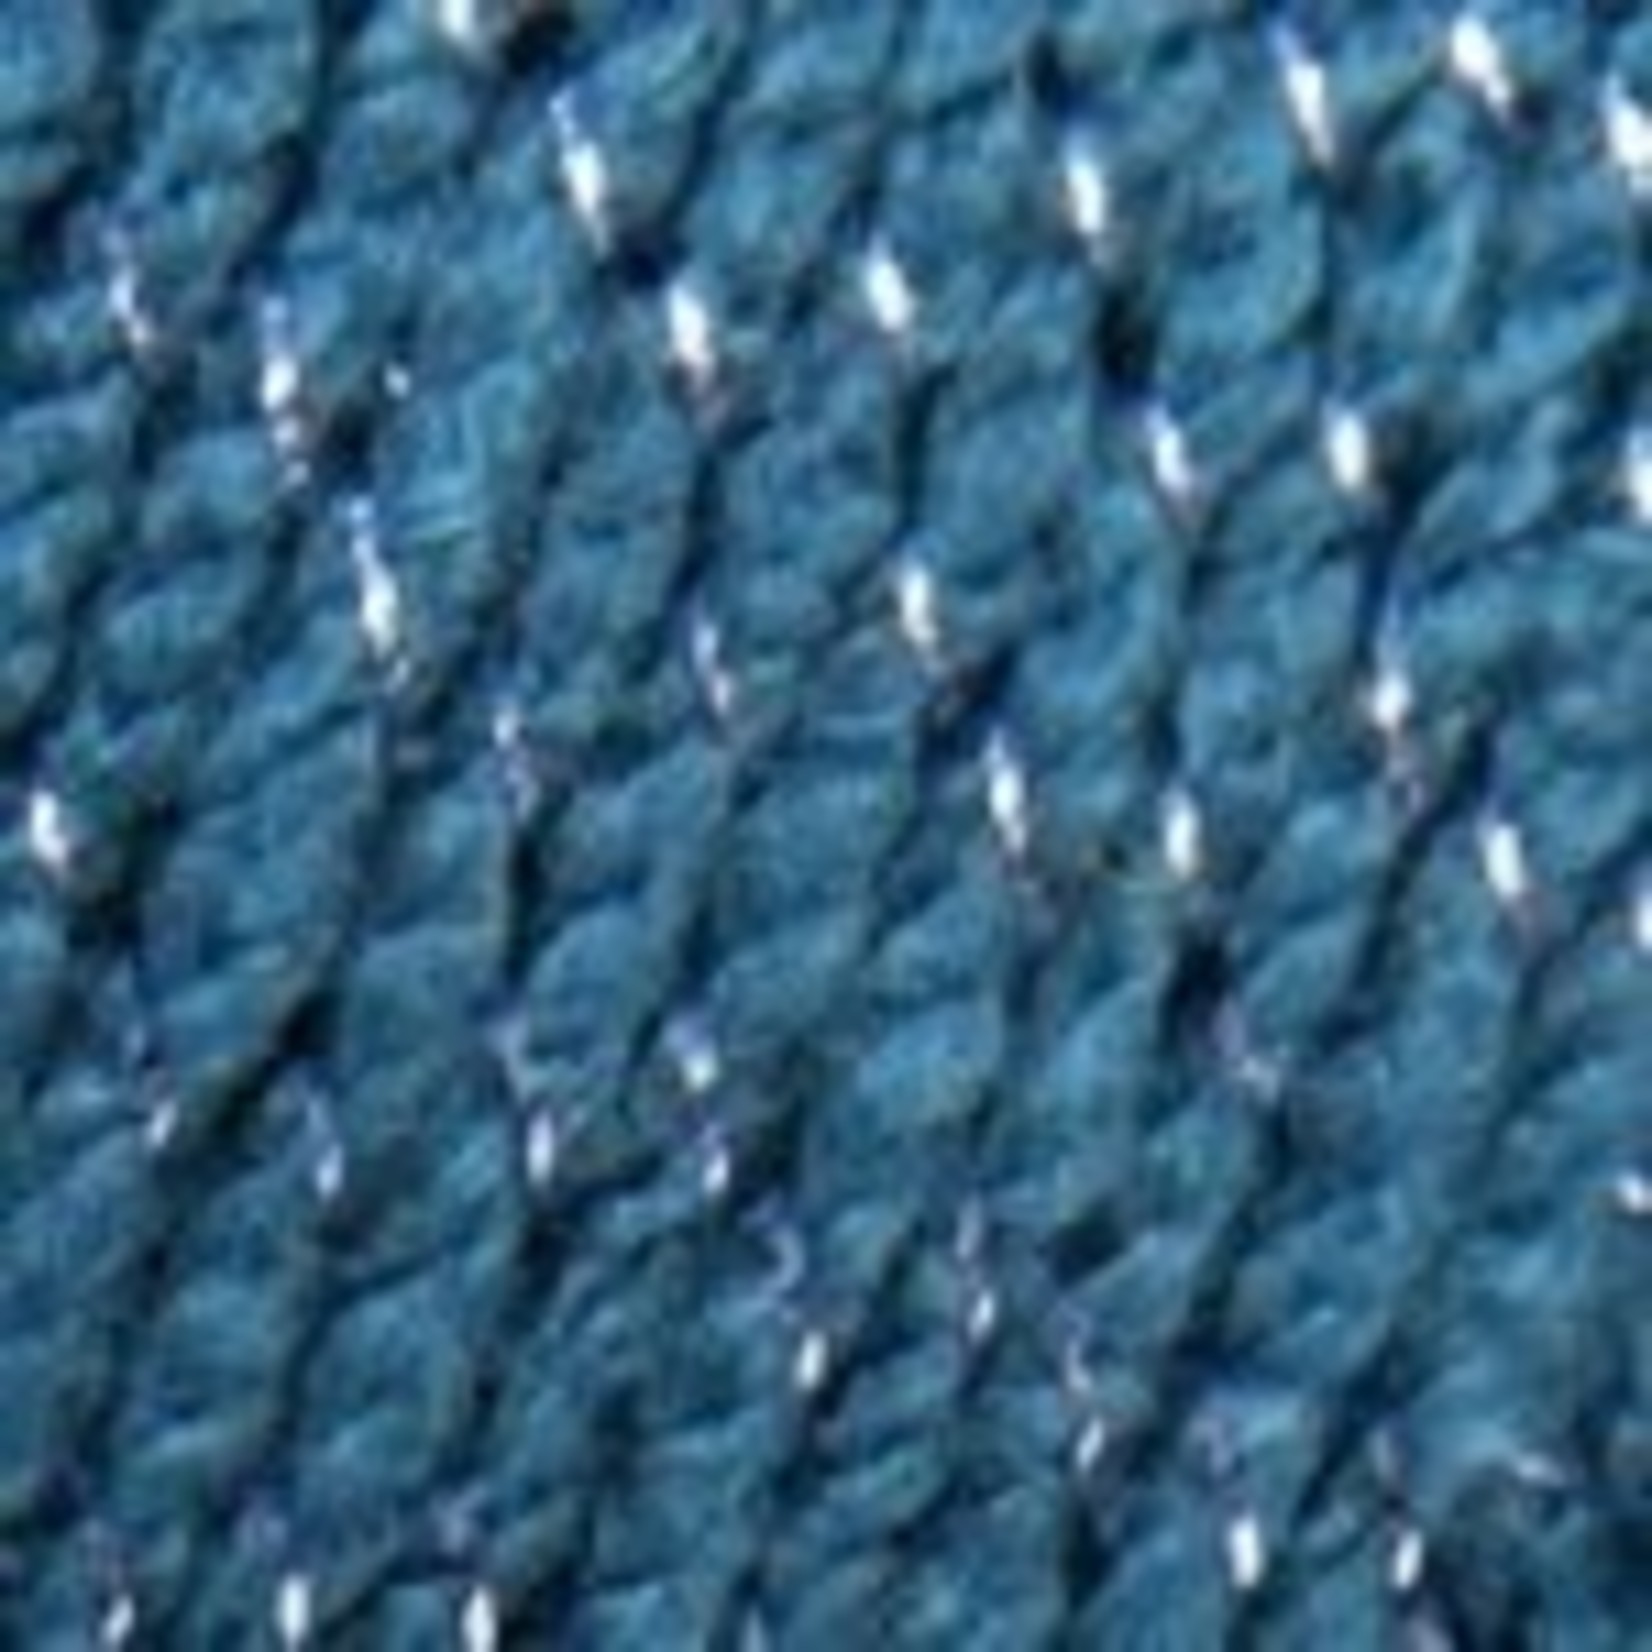 DMC Knitty 4 Glitter 228 Blauw